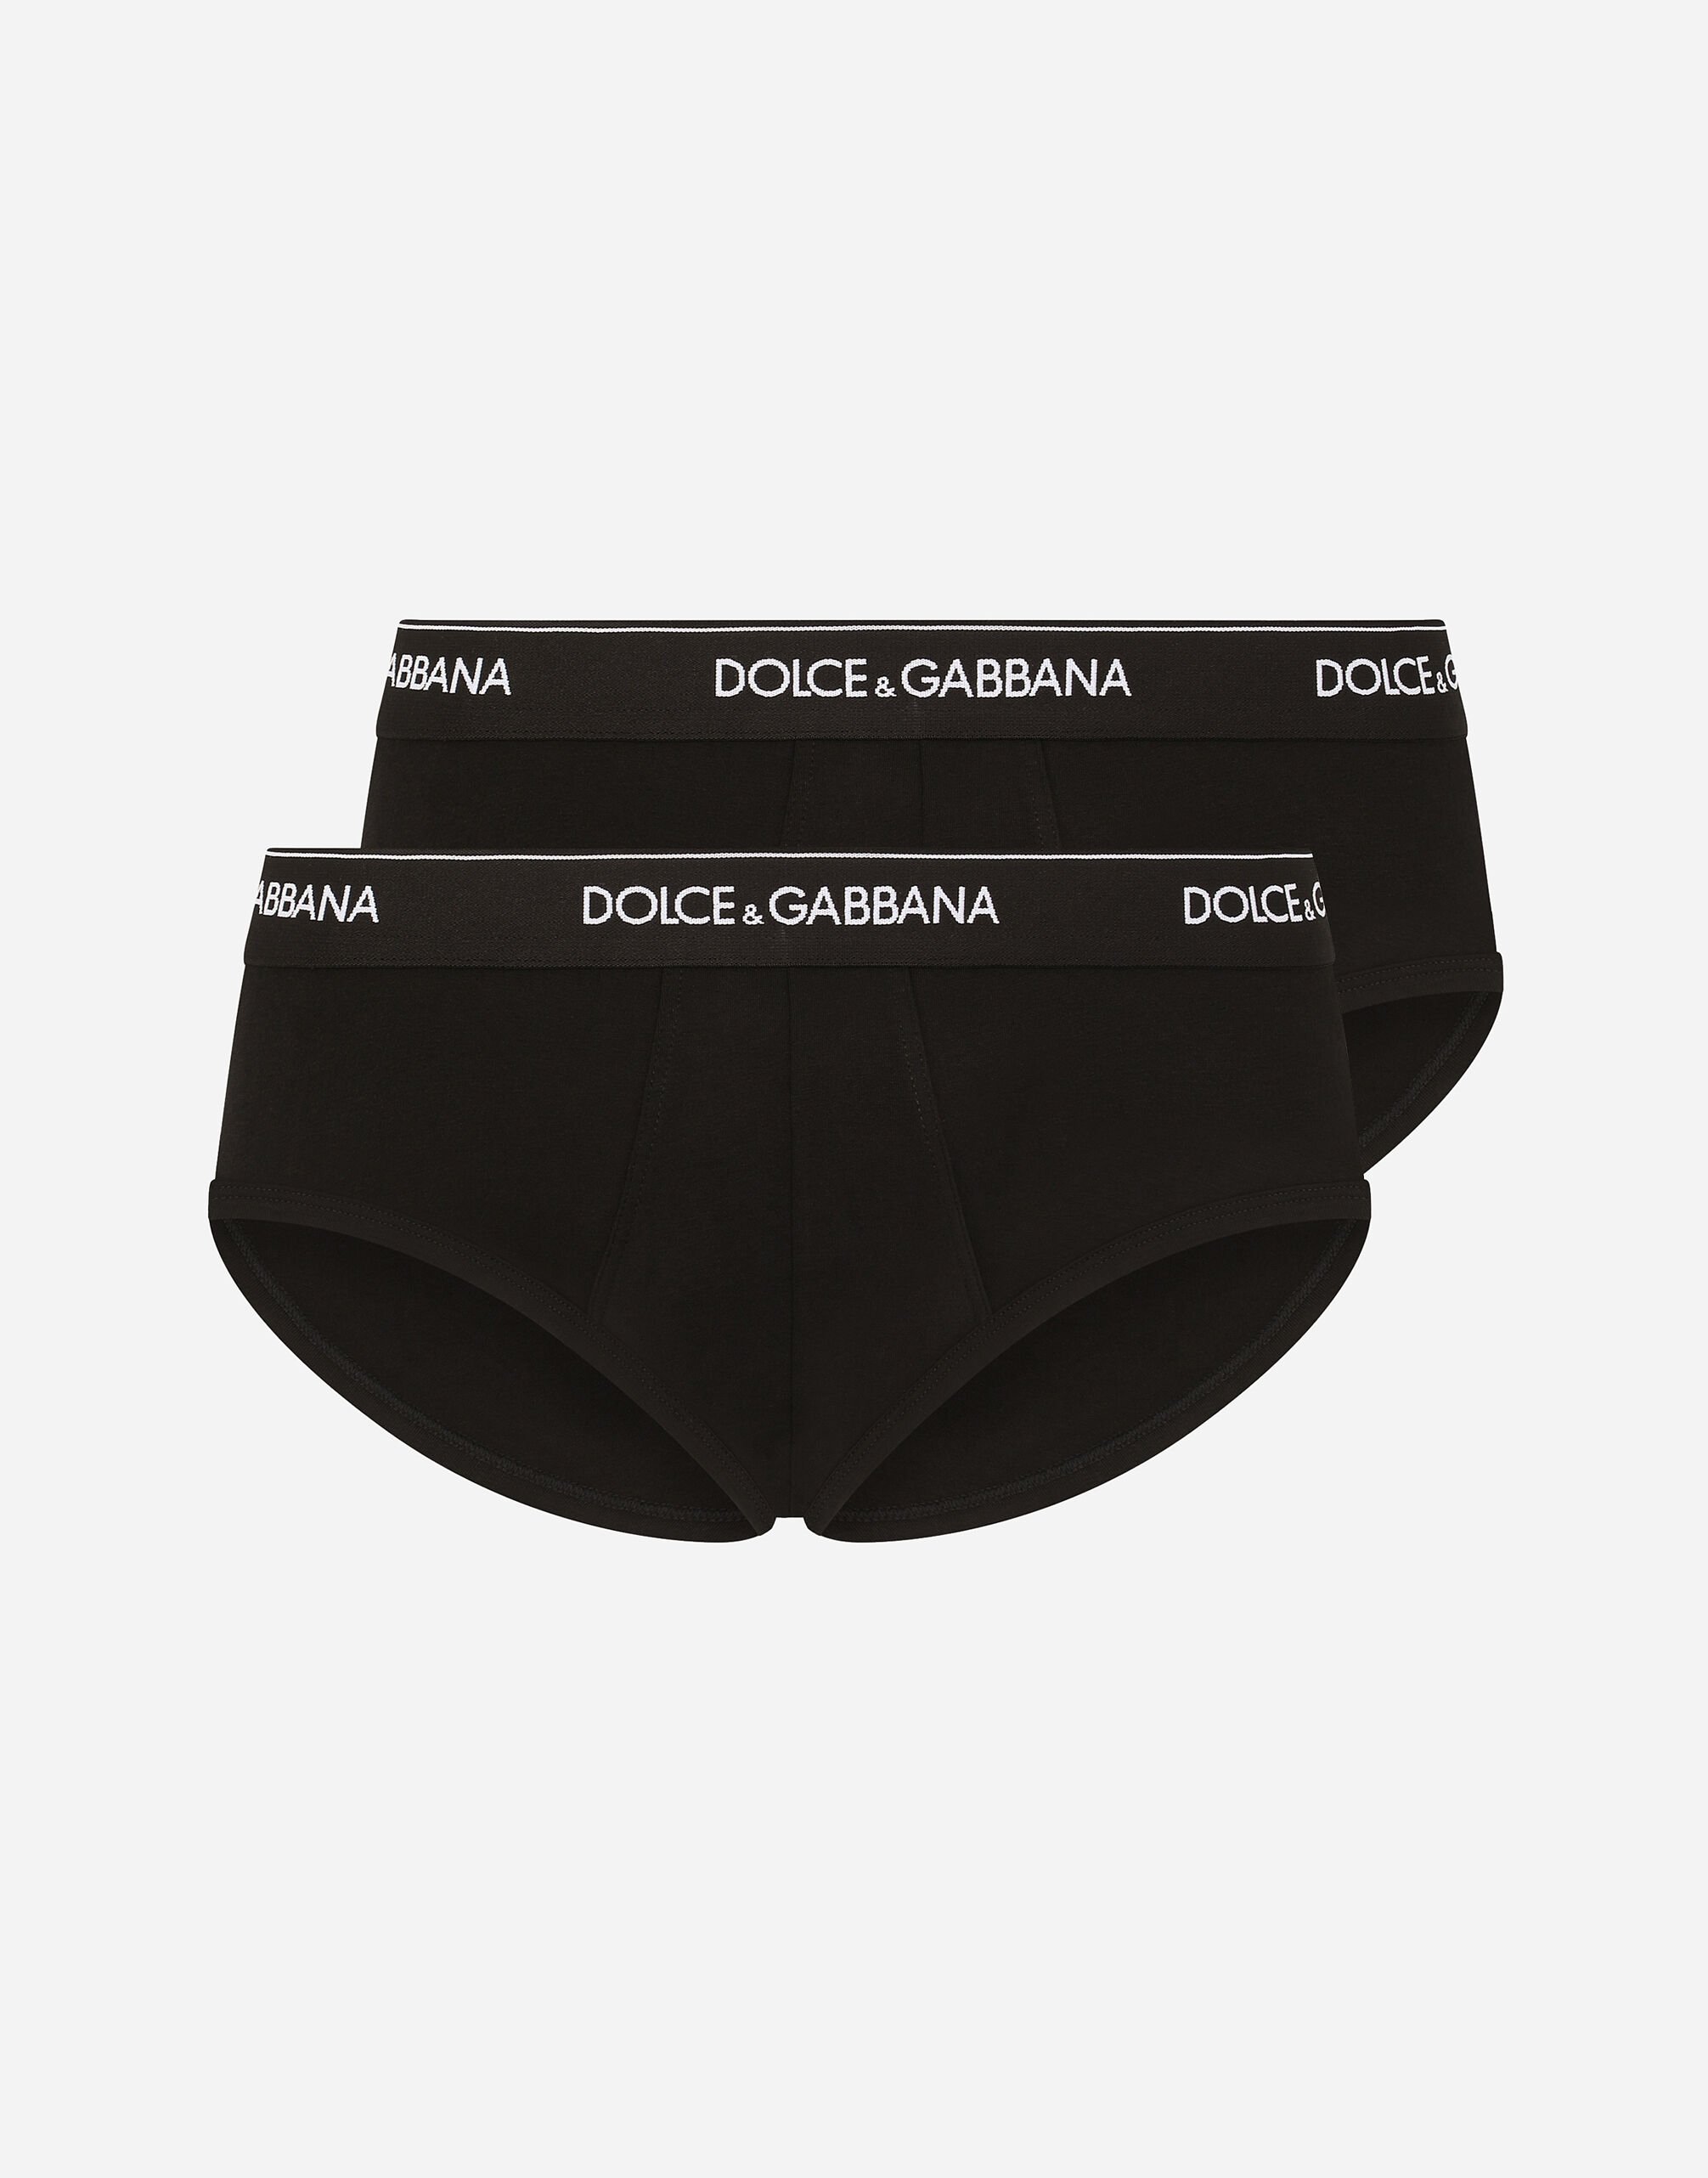 Mens Underwear Dolce & Gabbana, Style code: cont-n4a03j-M4C03J